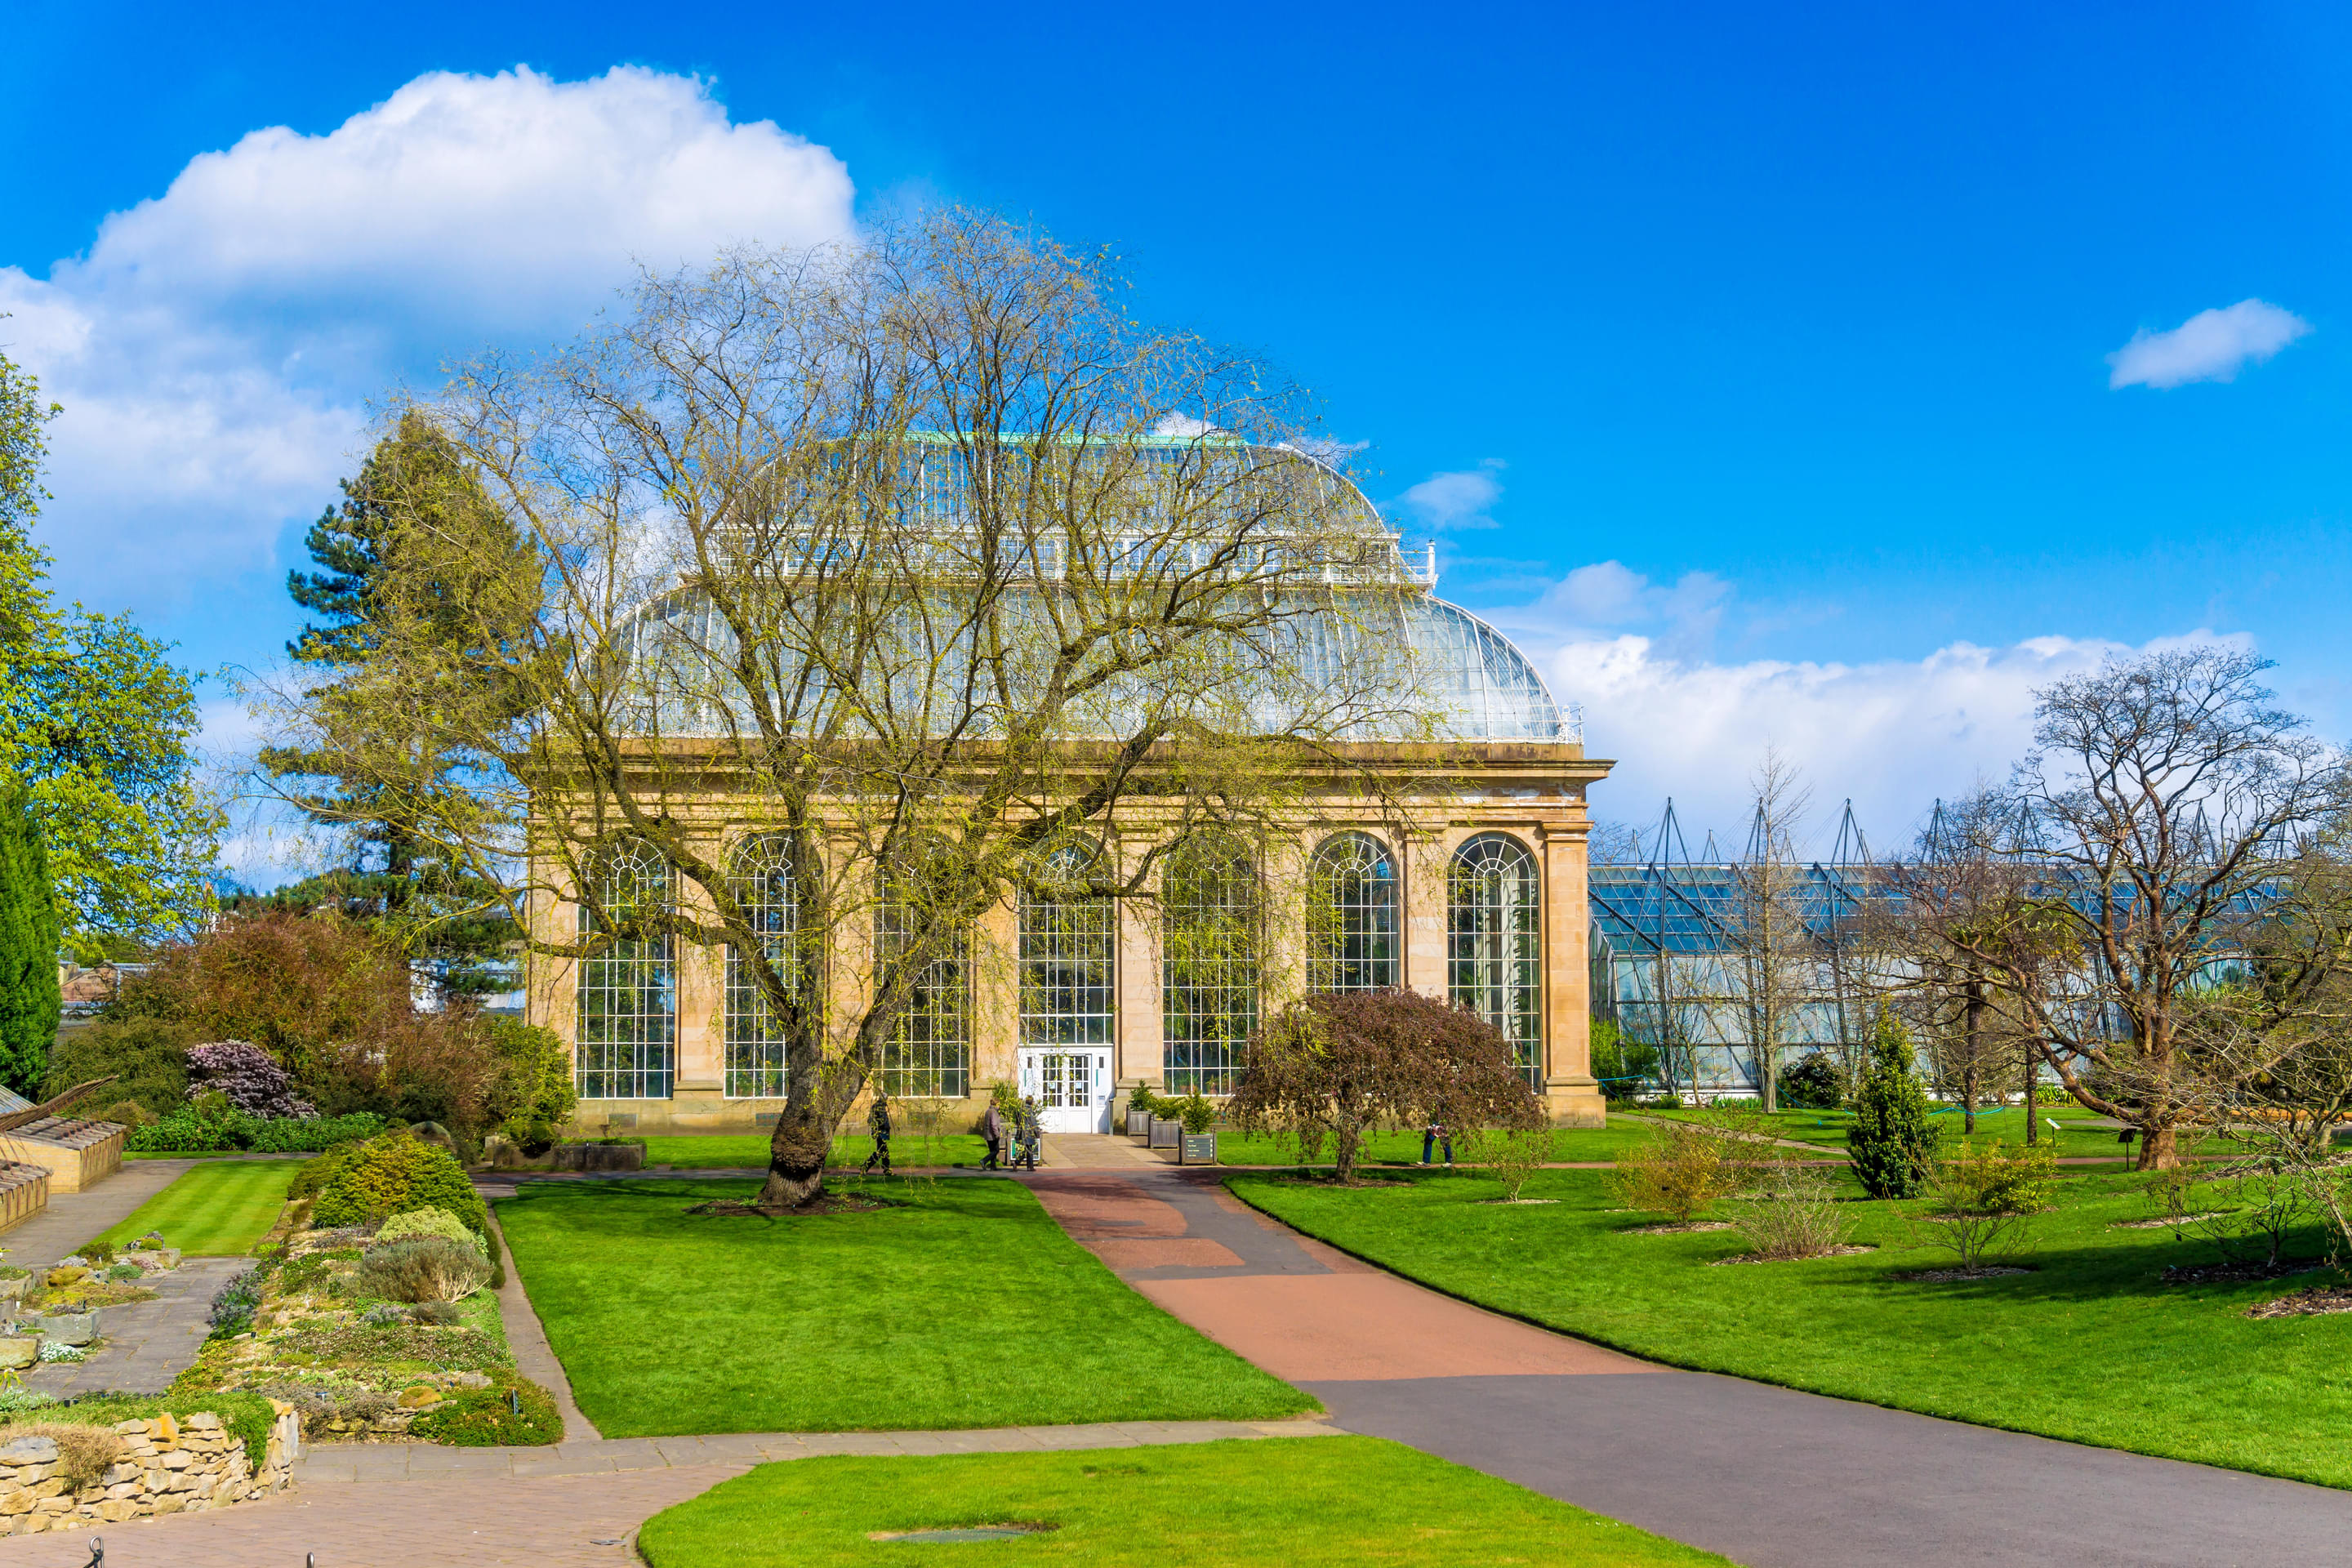 Royal Botanic Garden Overview